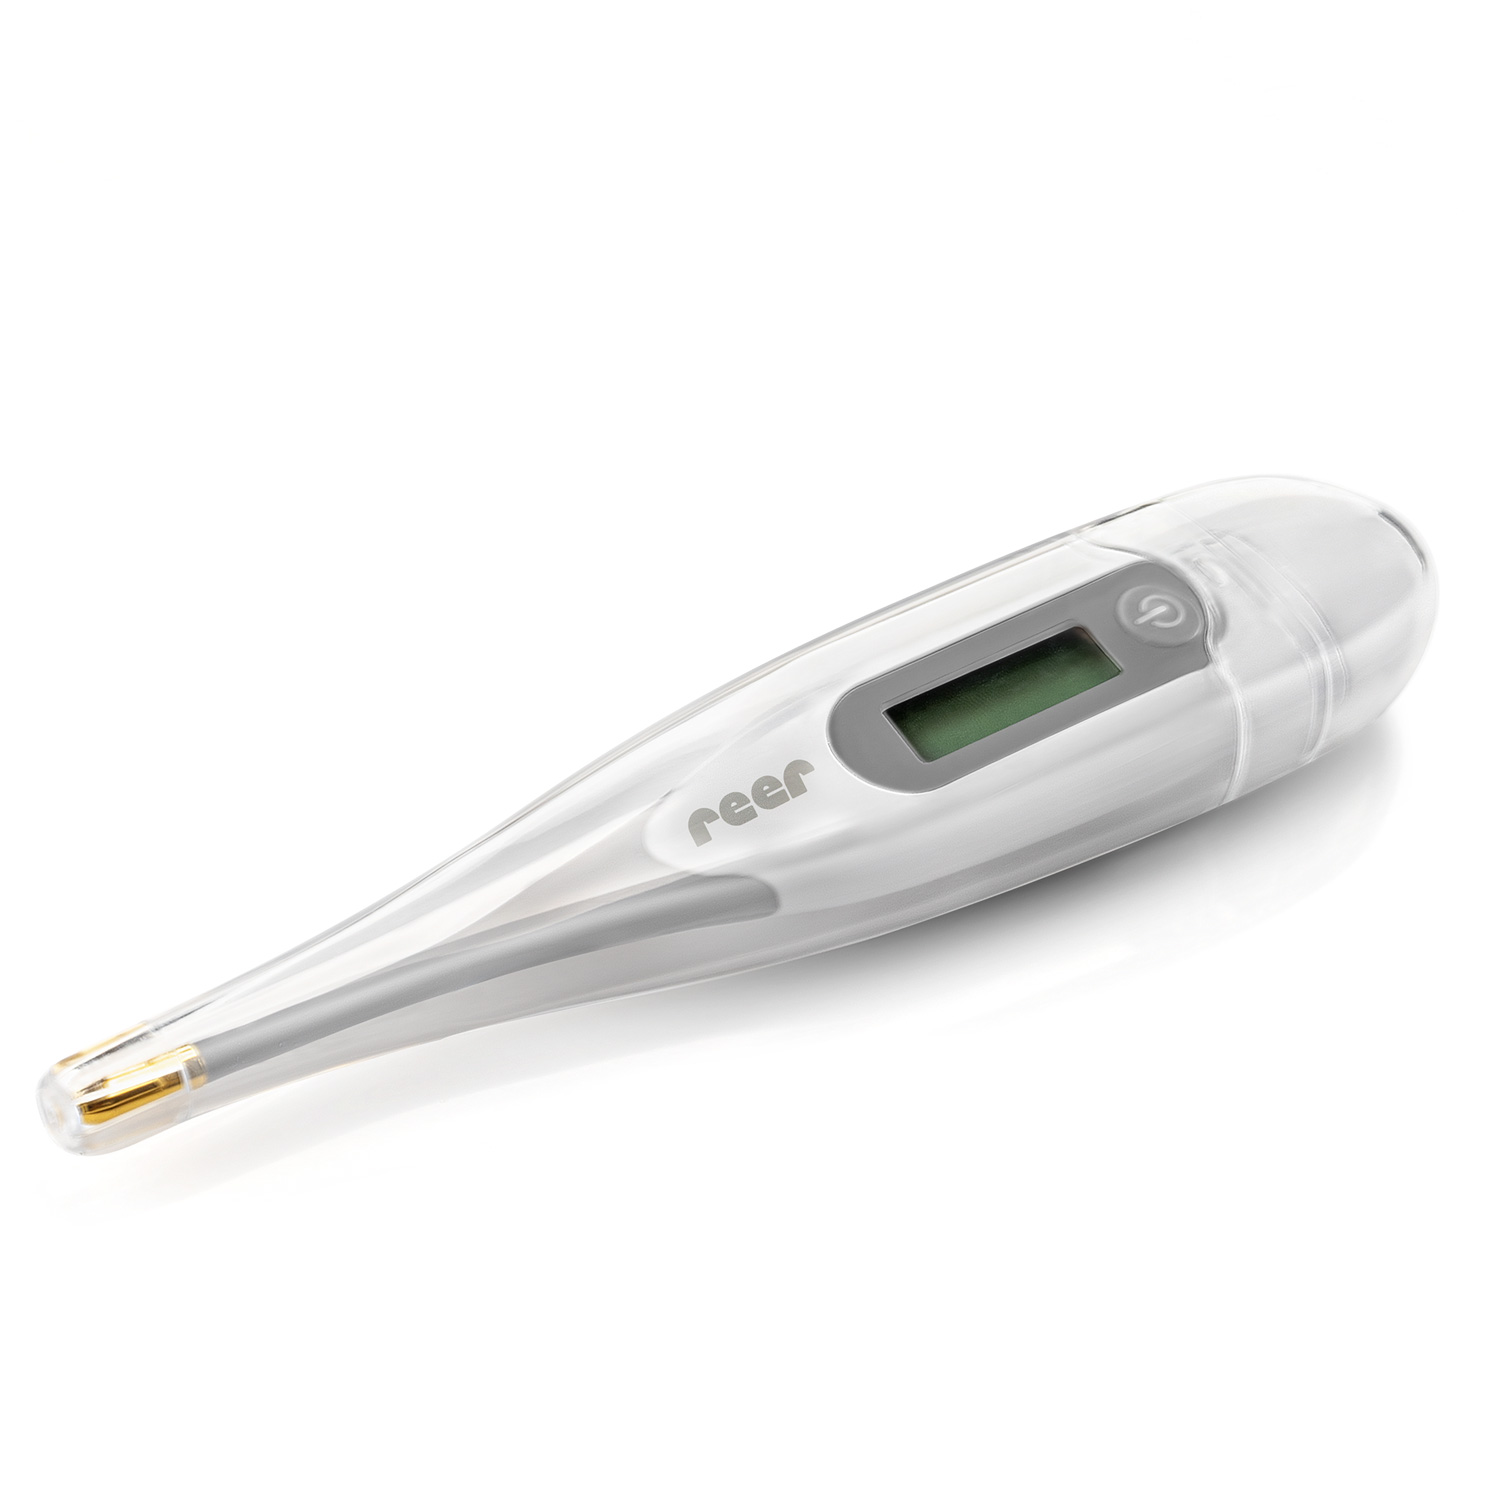 ExpressTemp digital Express-Thermometer